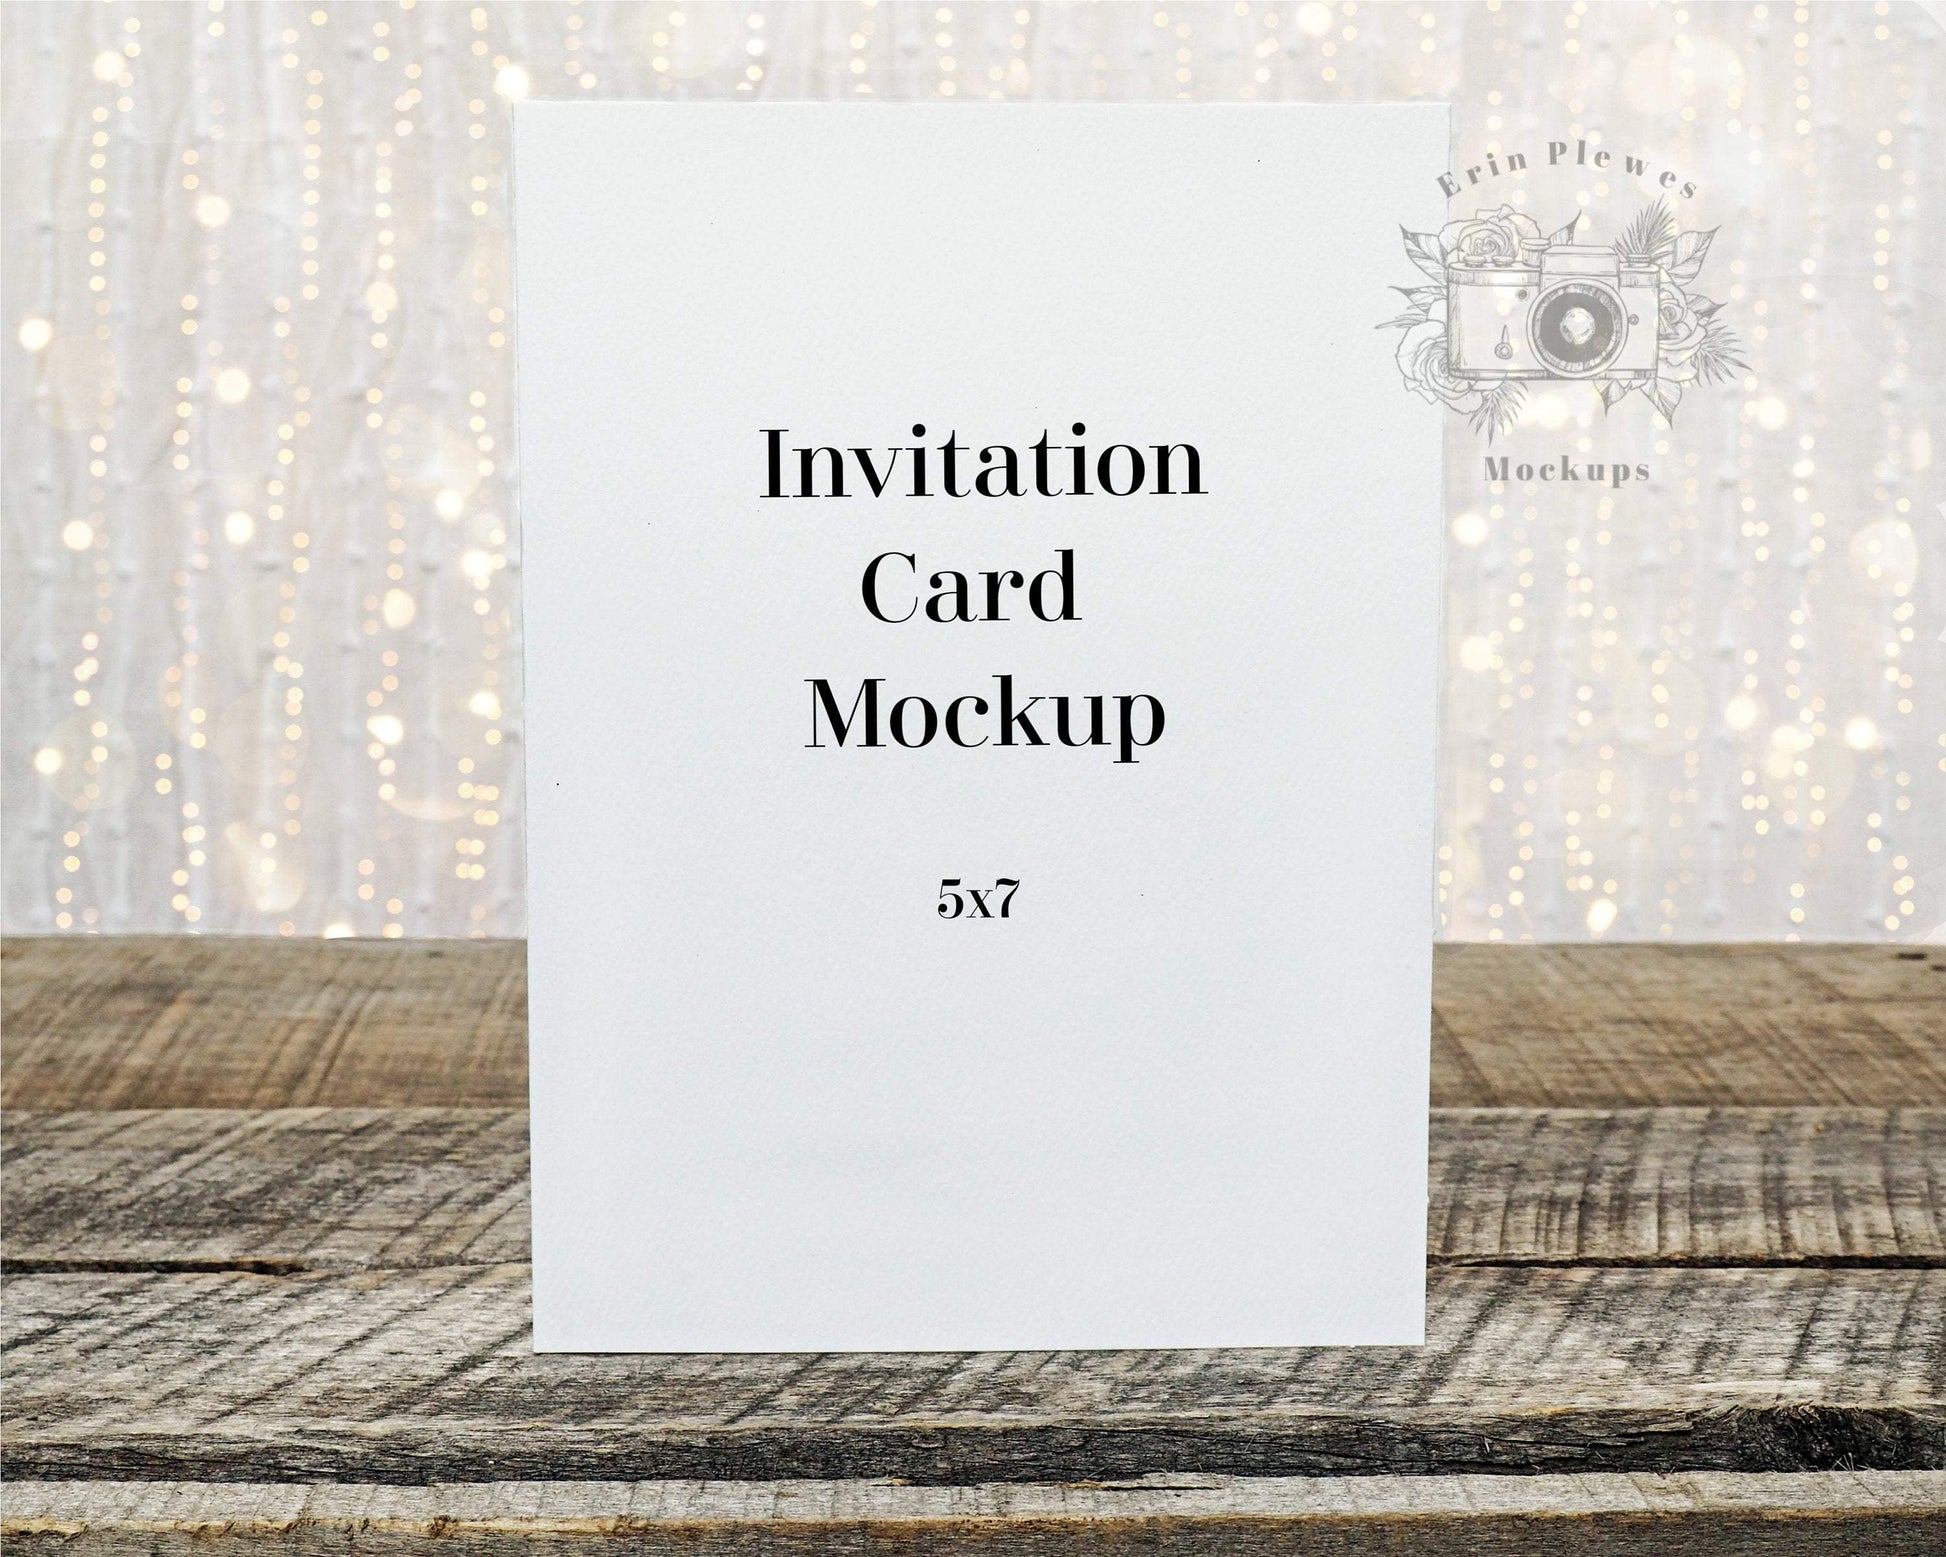 Erin Plewes Mockups Greeting card mockup, Invitation mock-up for rustic wedding thank you card lifestyle stock photo, Jpeg instant Digital Download